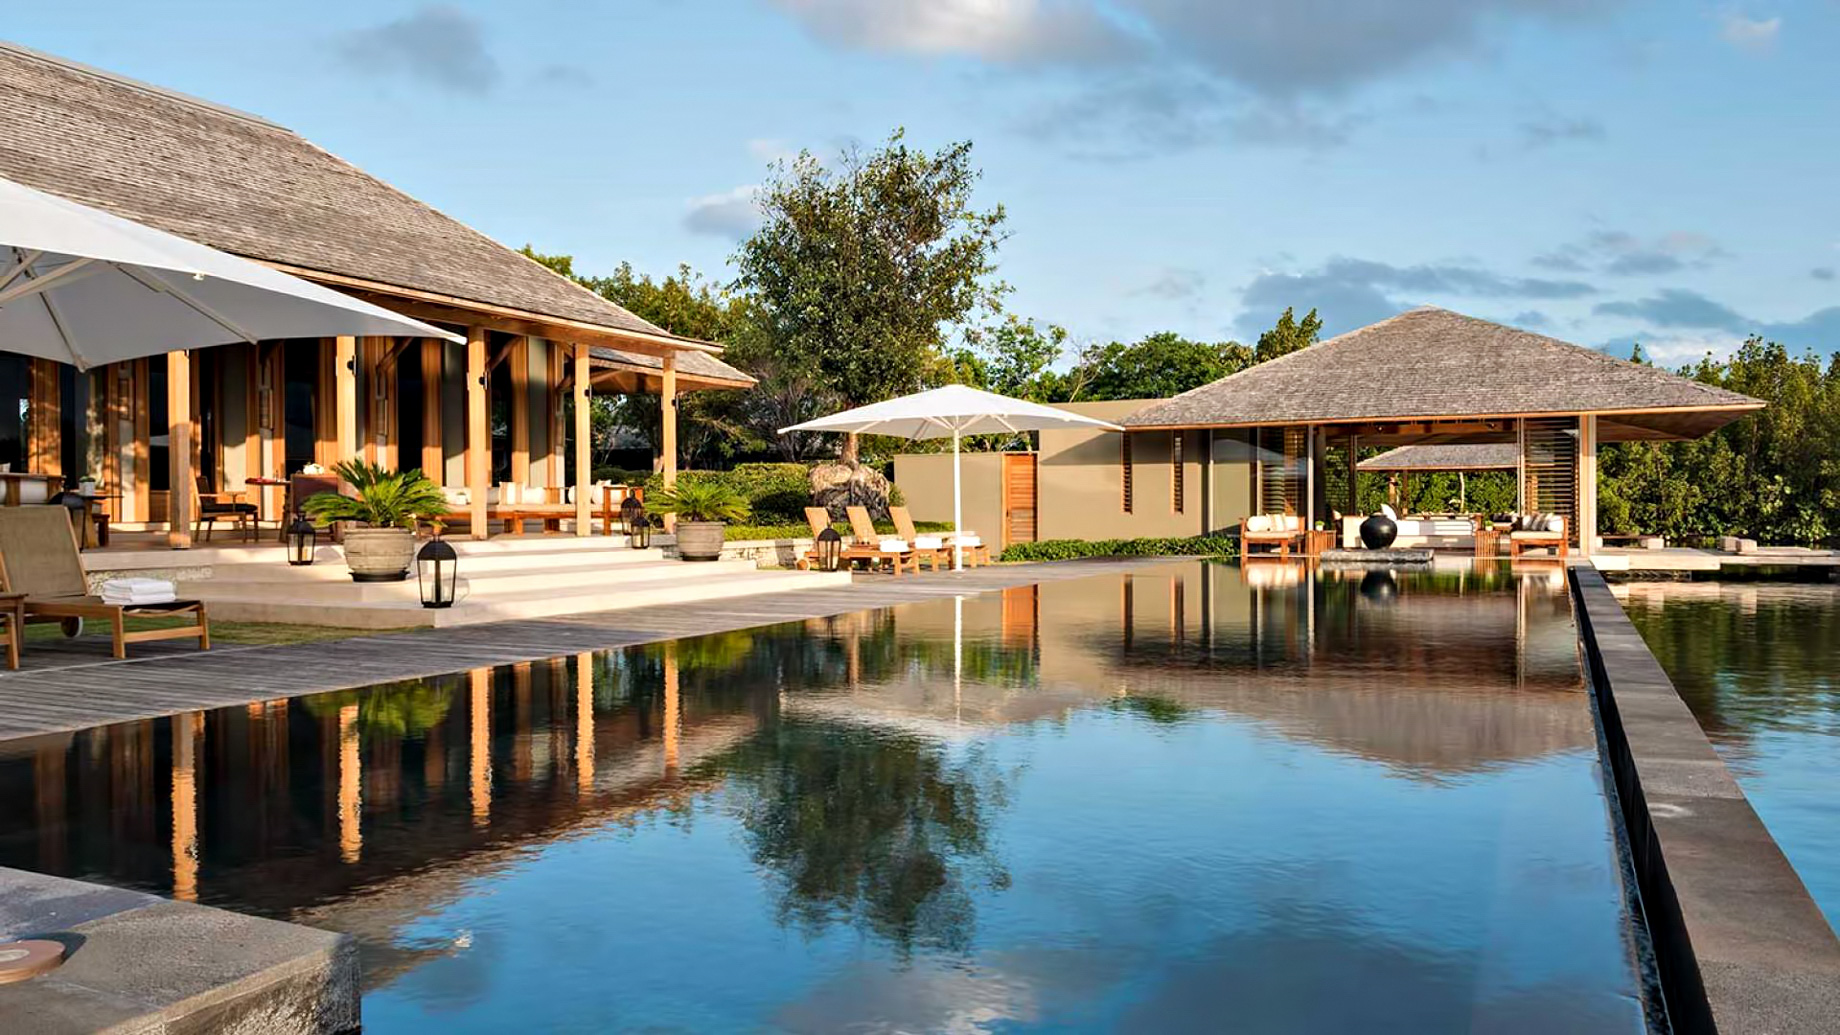 Amanyara Resort - Providenciales, Turks and Caicos Islands - 6 Bedroom Amanyara Villa Infinity Pool Deck